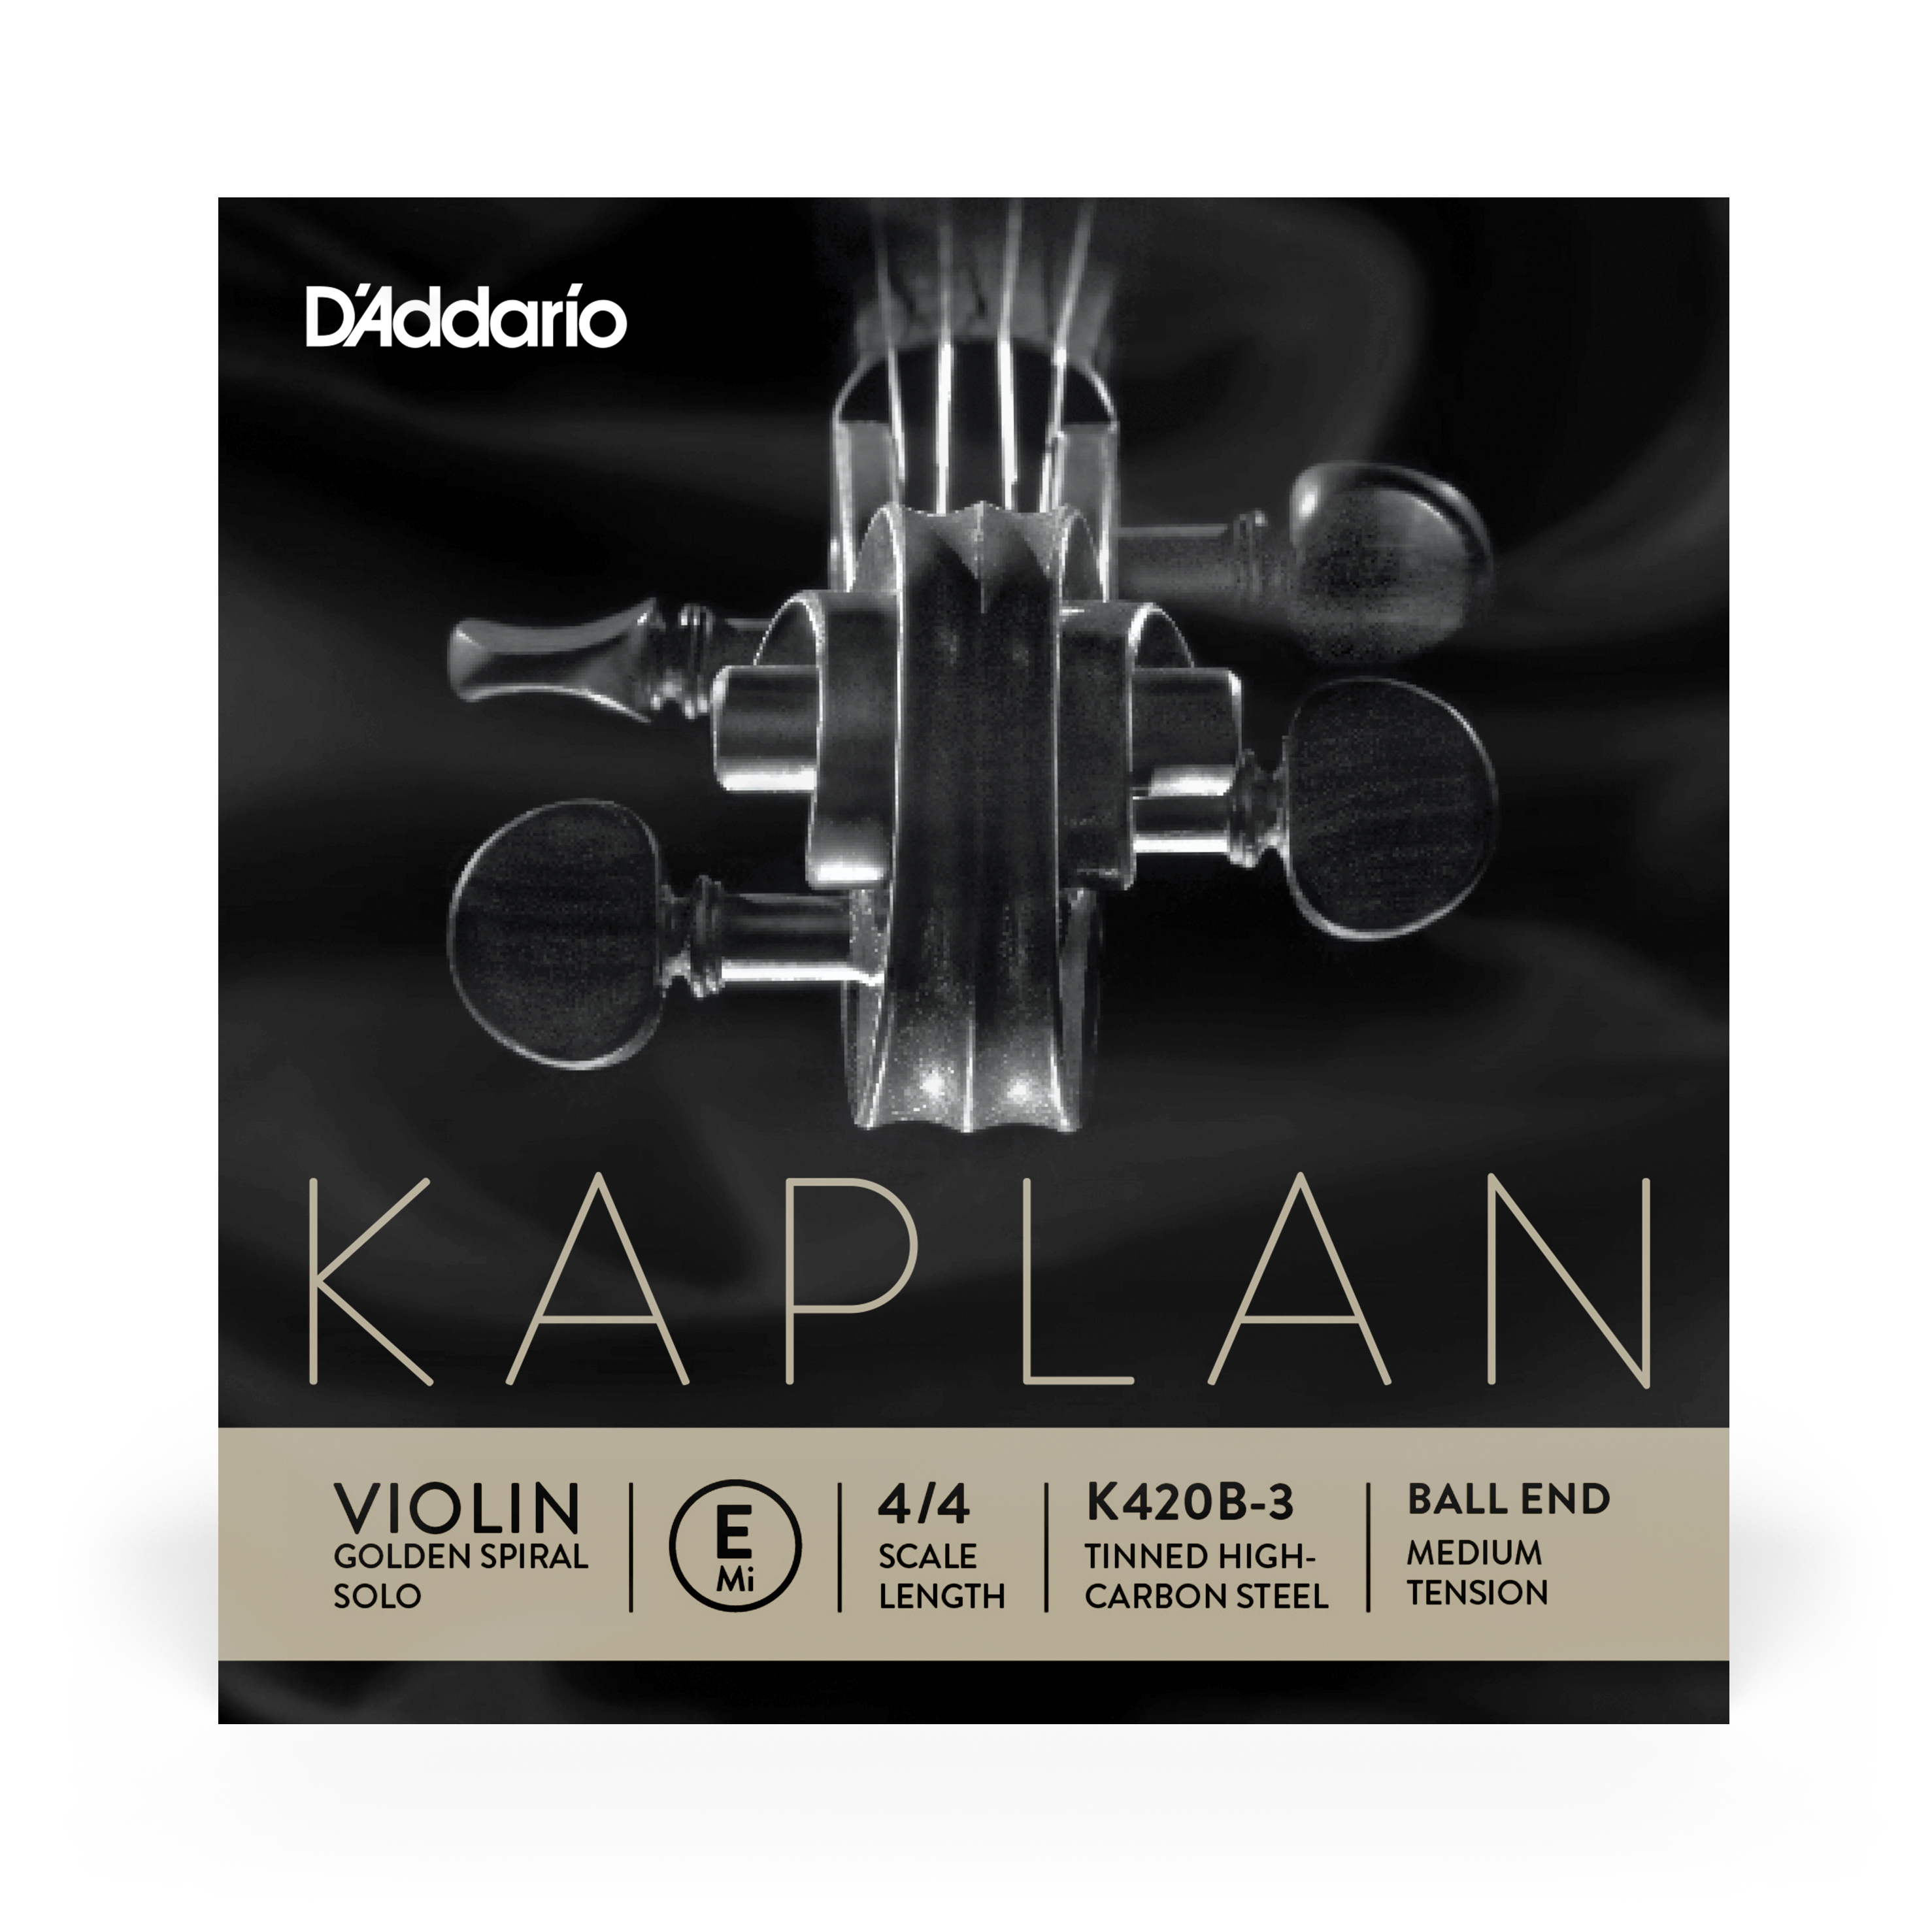 Daddario orchestral it K420b-3 corda singola mi d'addario kaplan golden spiral solo per violino, scala 4/4, tensione media